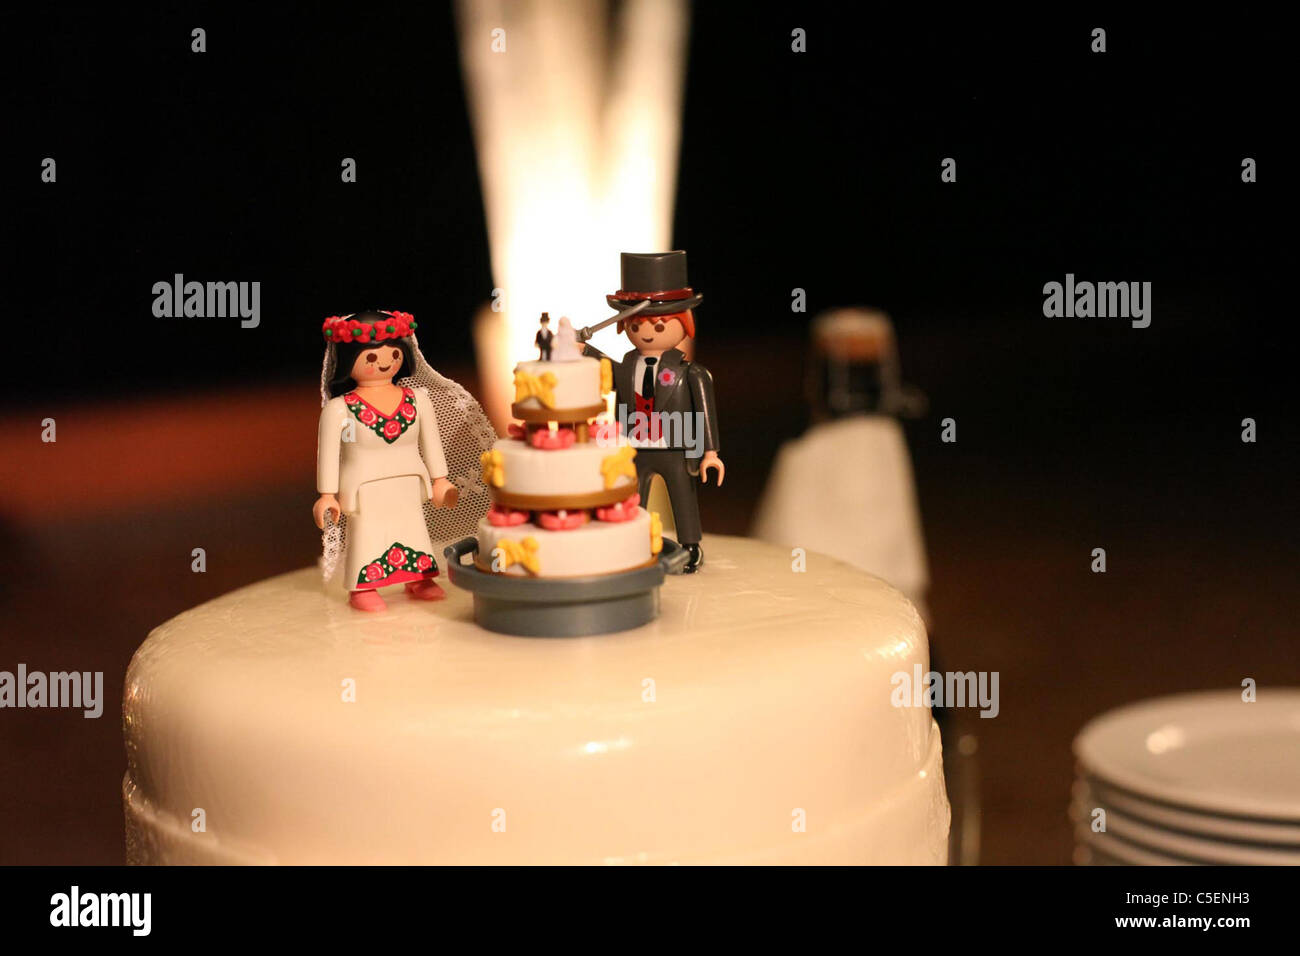 Lego wedding cake top. Stock Photo